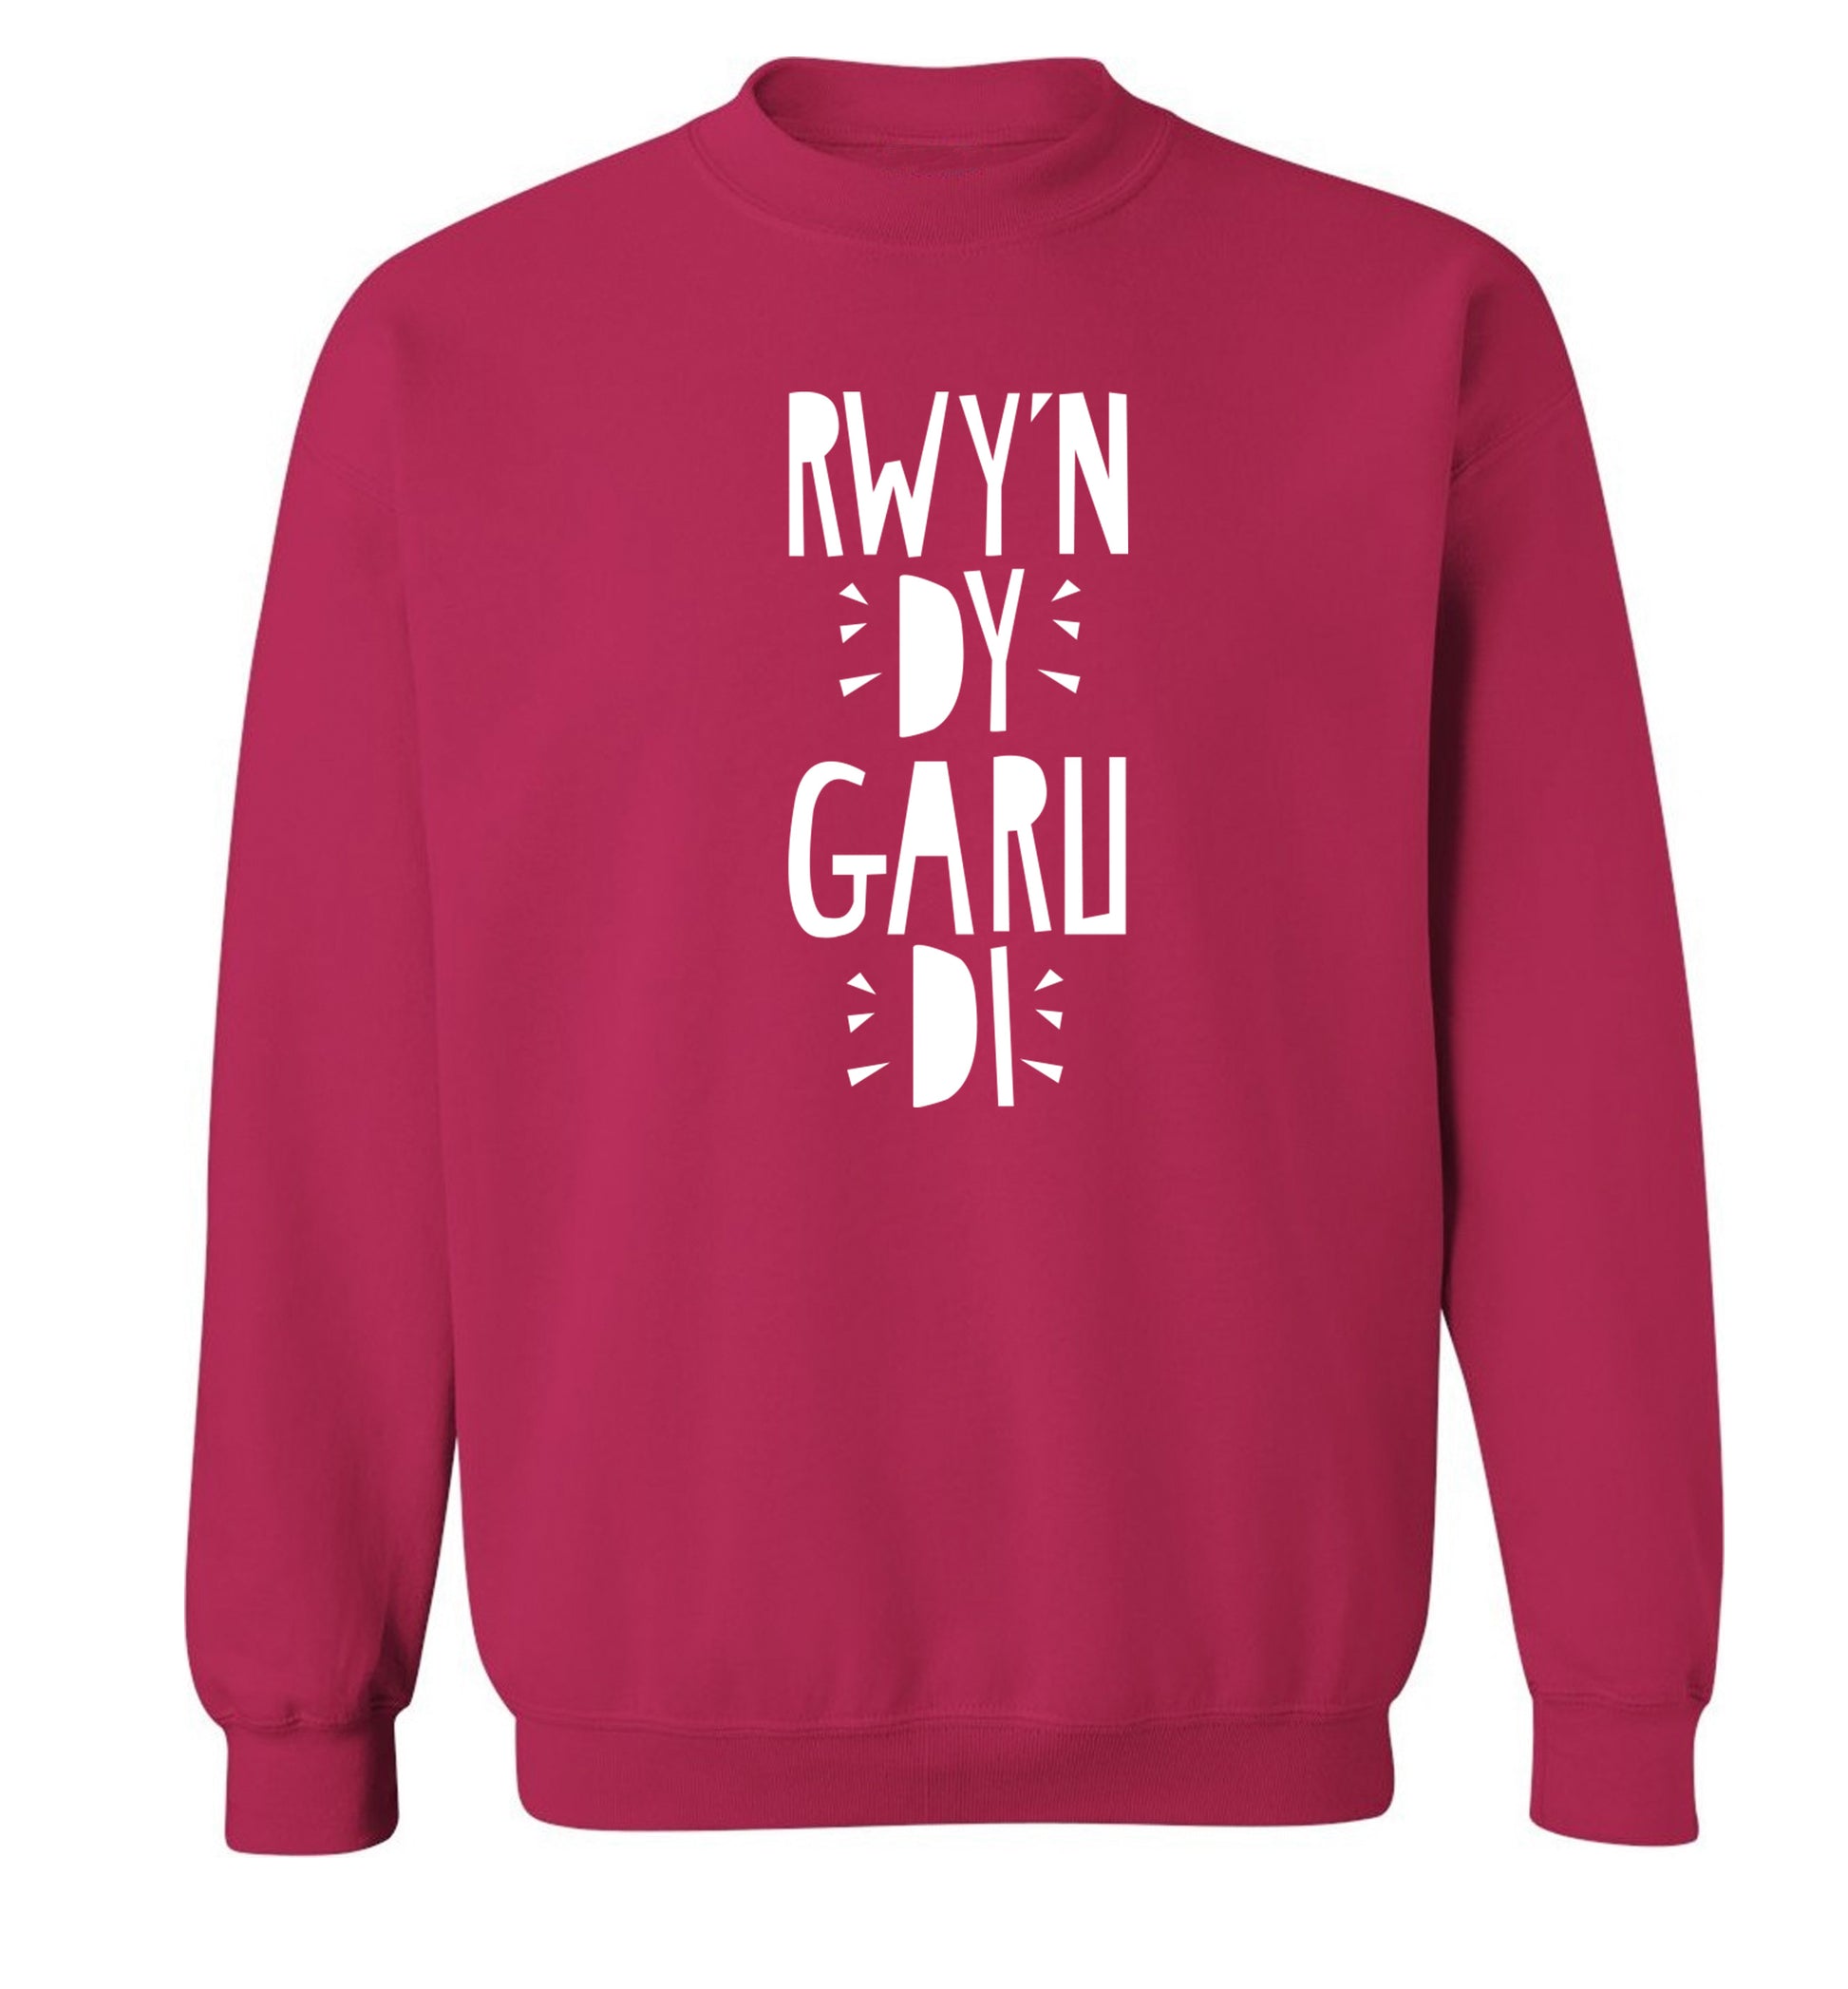 Rwy'n dy garu di - I love you Adult's unisex pink Sweater 2XL